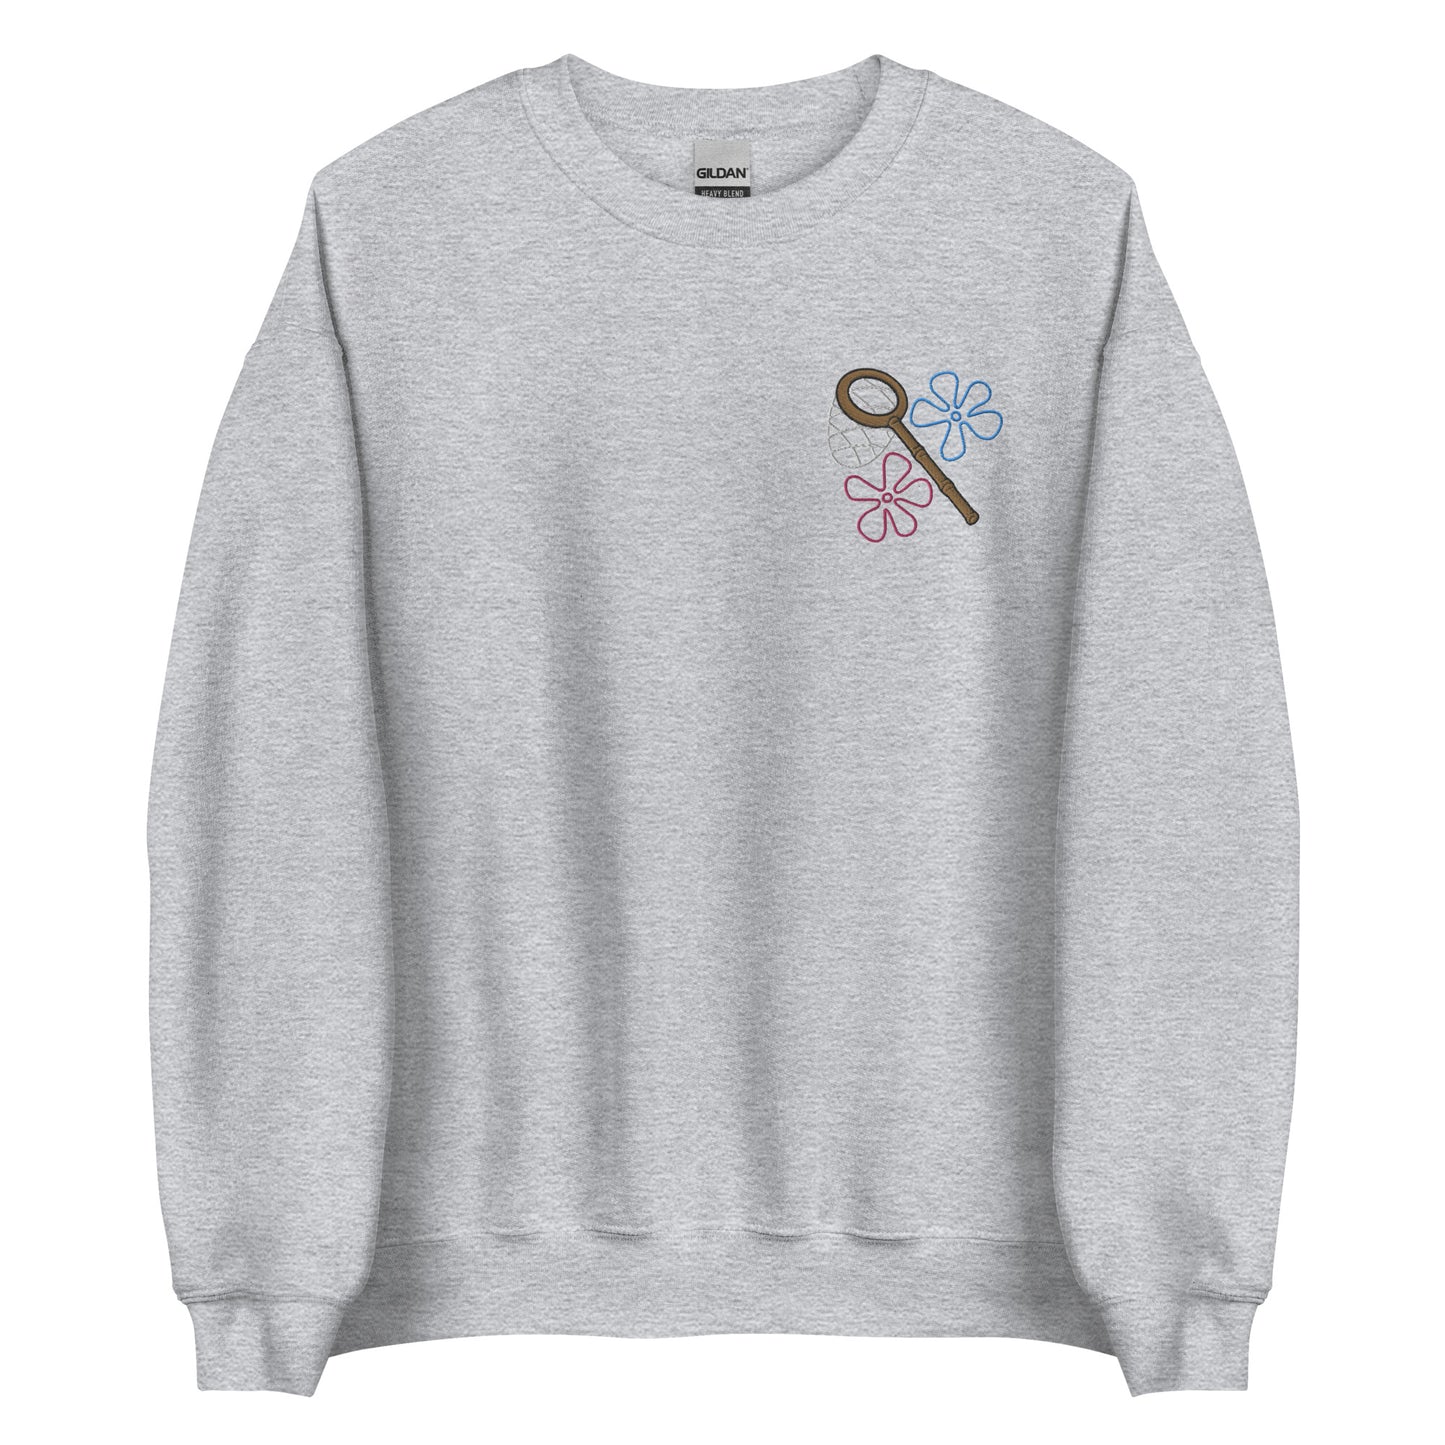 Jellyfish Net embroidered crewneck sweatshirt